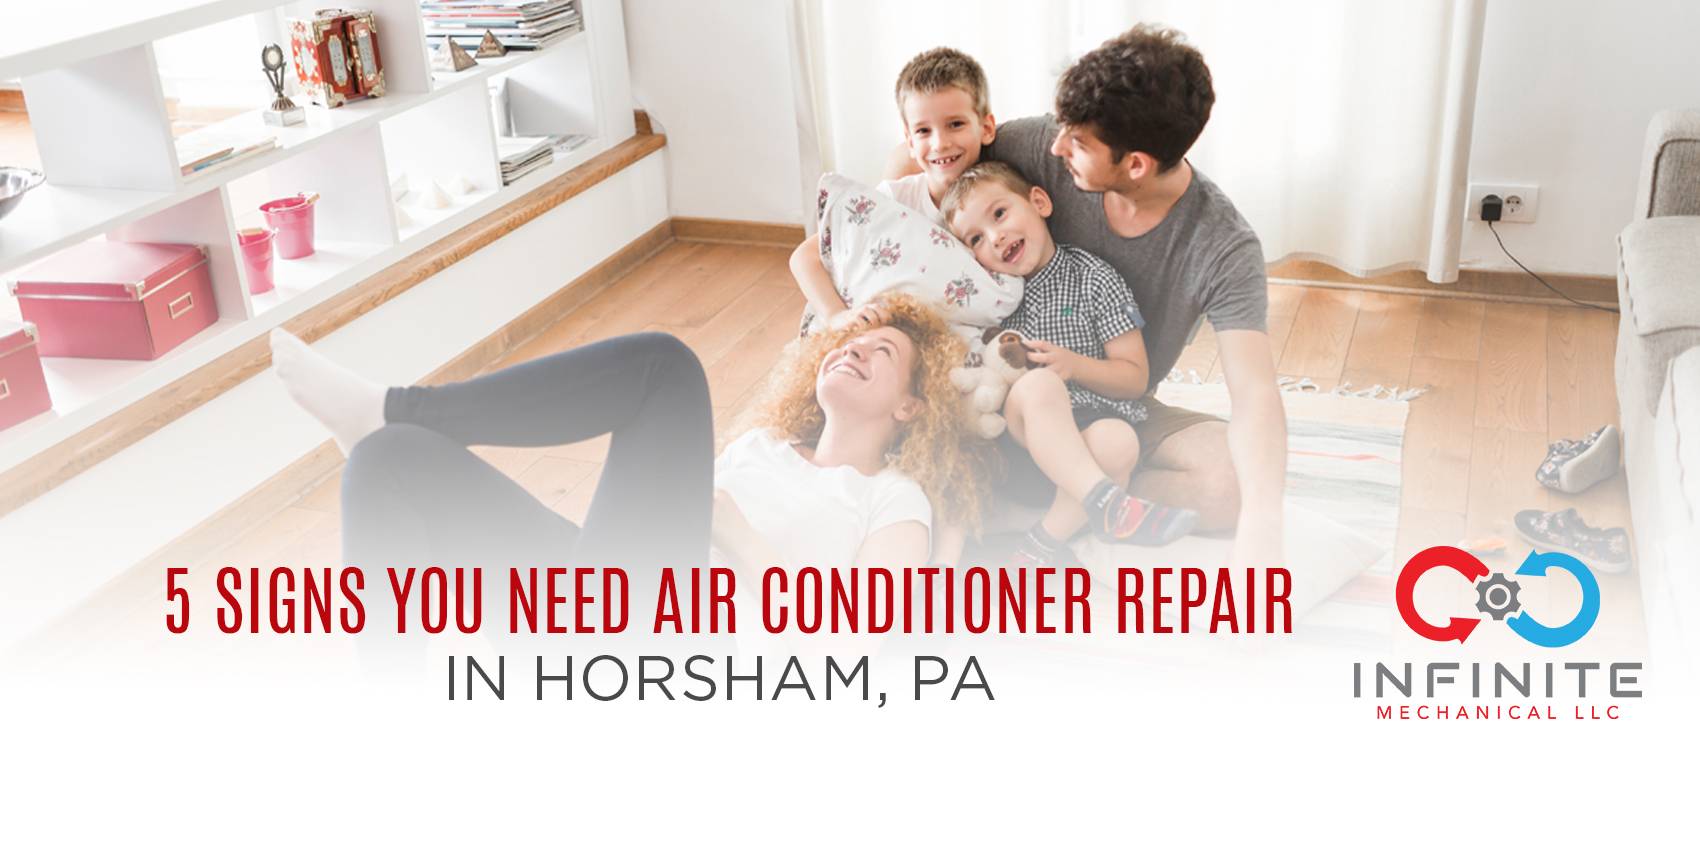 Air Conditioner Repair in Horsham, PA